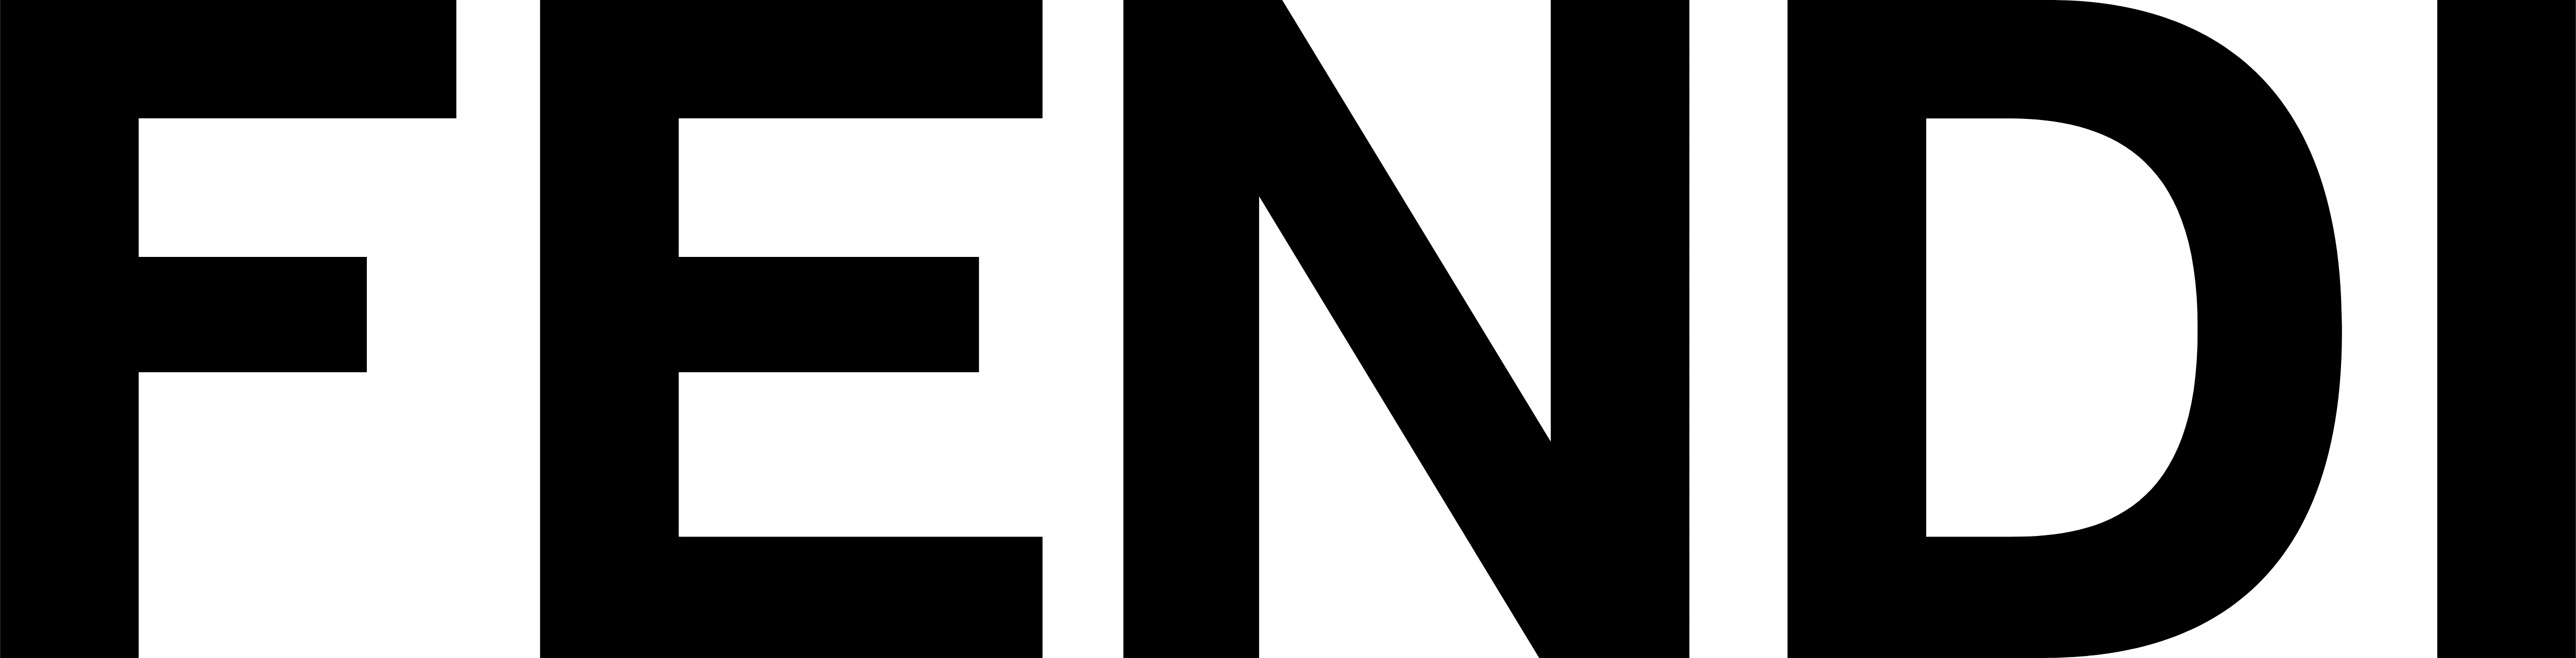 Download Contoh Fendi Logopattern - Cari Logo